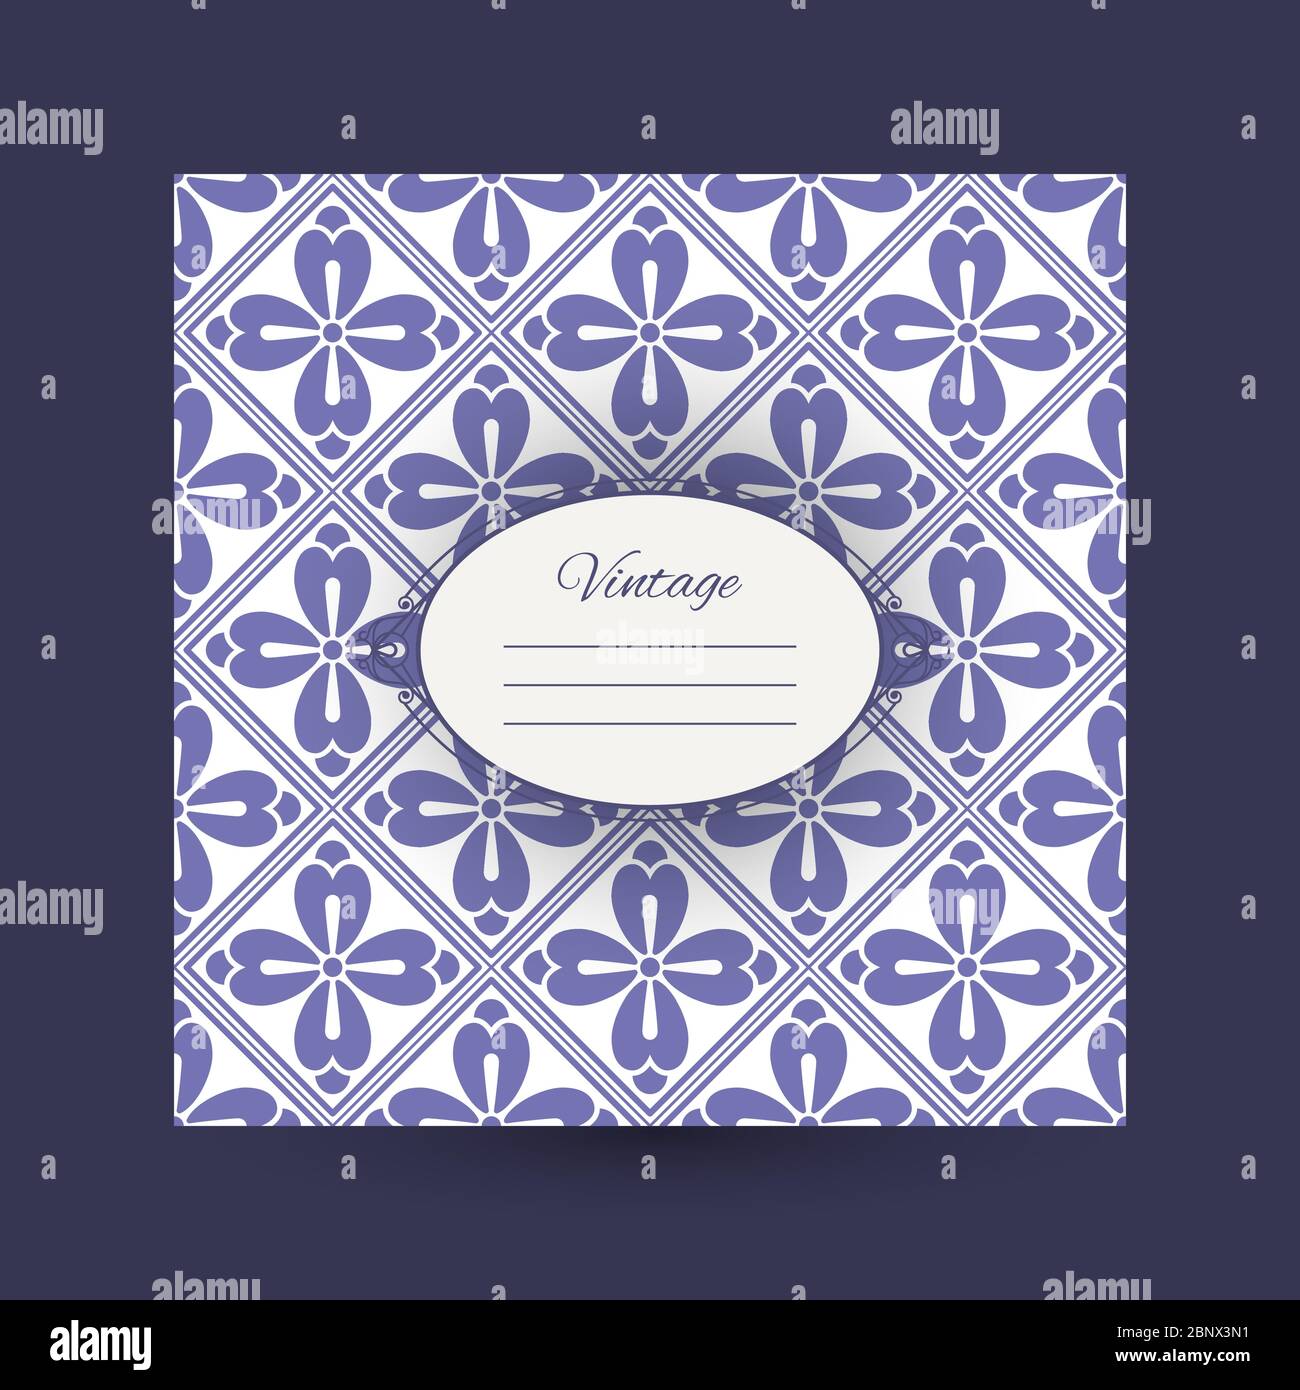 Square vintage greeting card design with violet pattern and decorative frame. Vector illustration Stock Vector